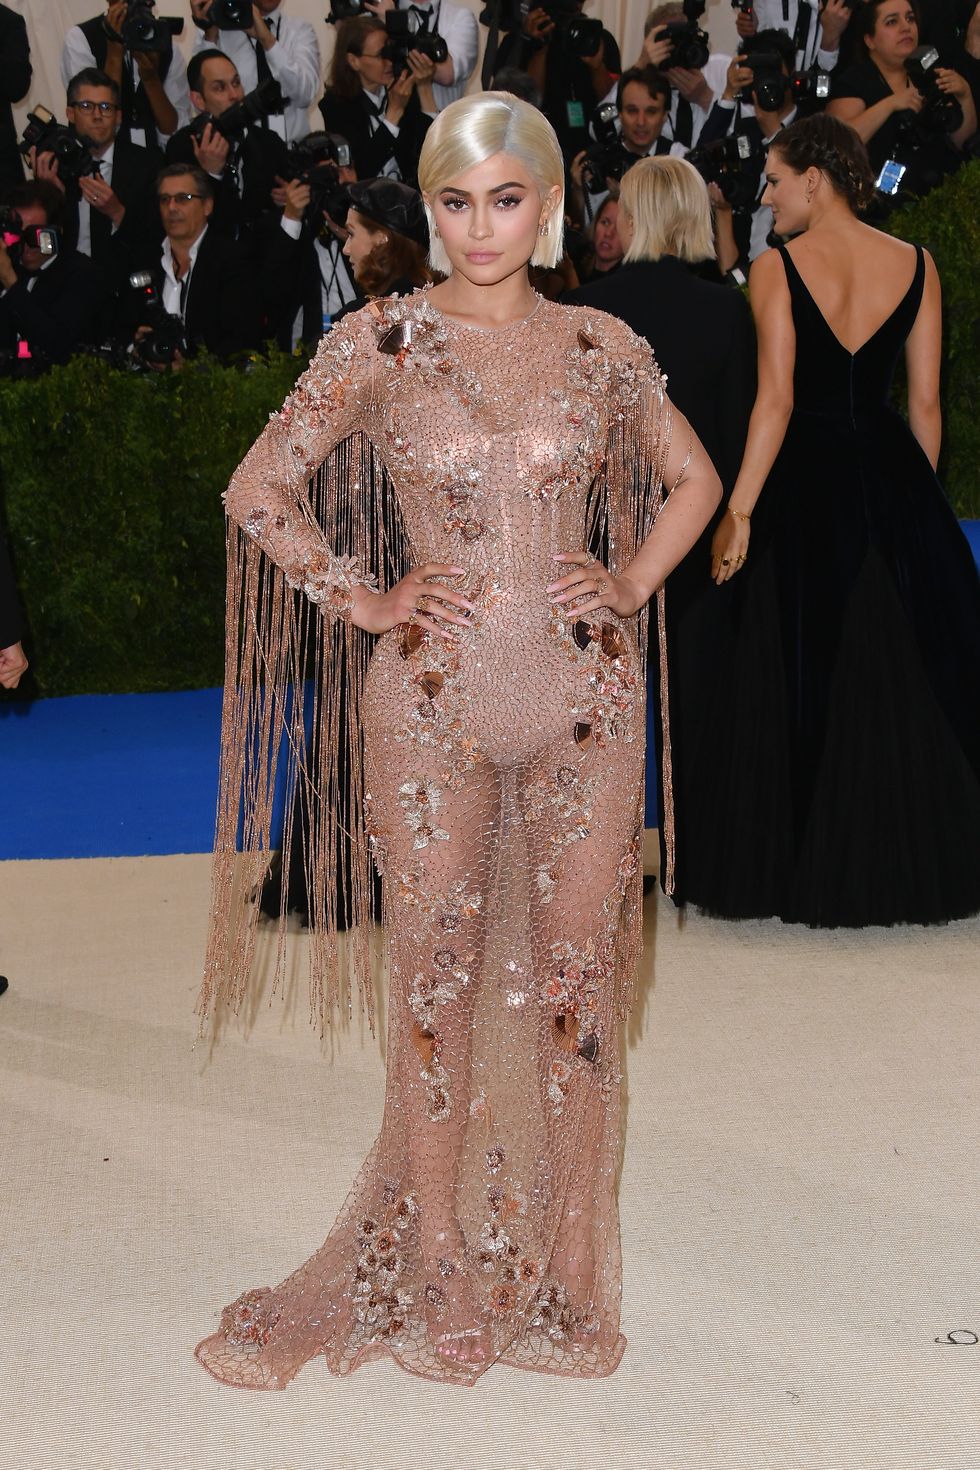 Kylie Jenner in Naked Versace Dress at Met Gala 2017 - Kylie